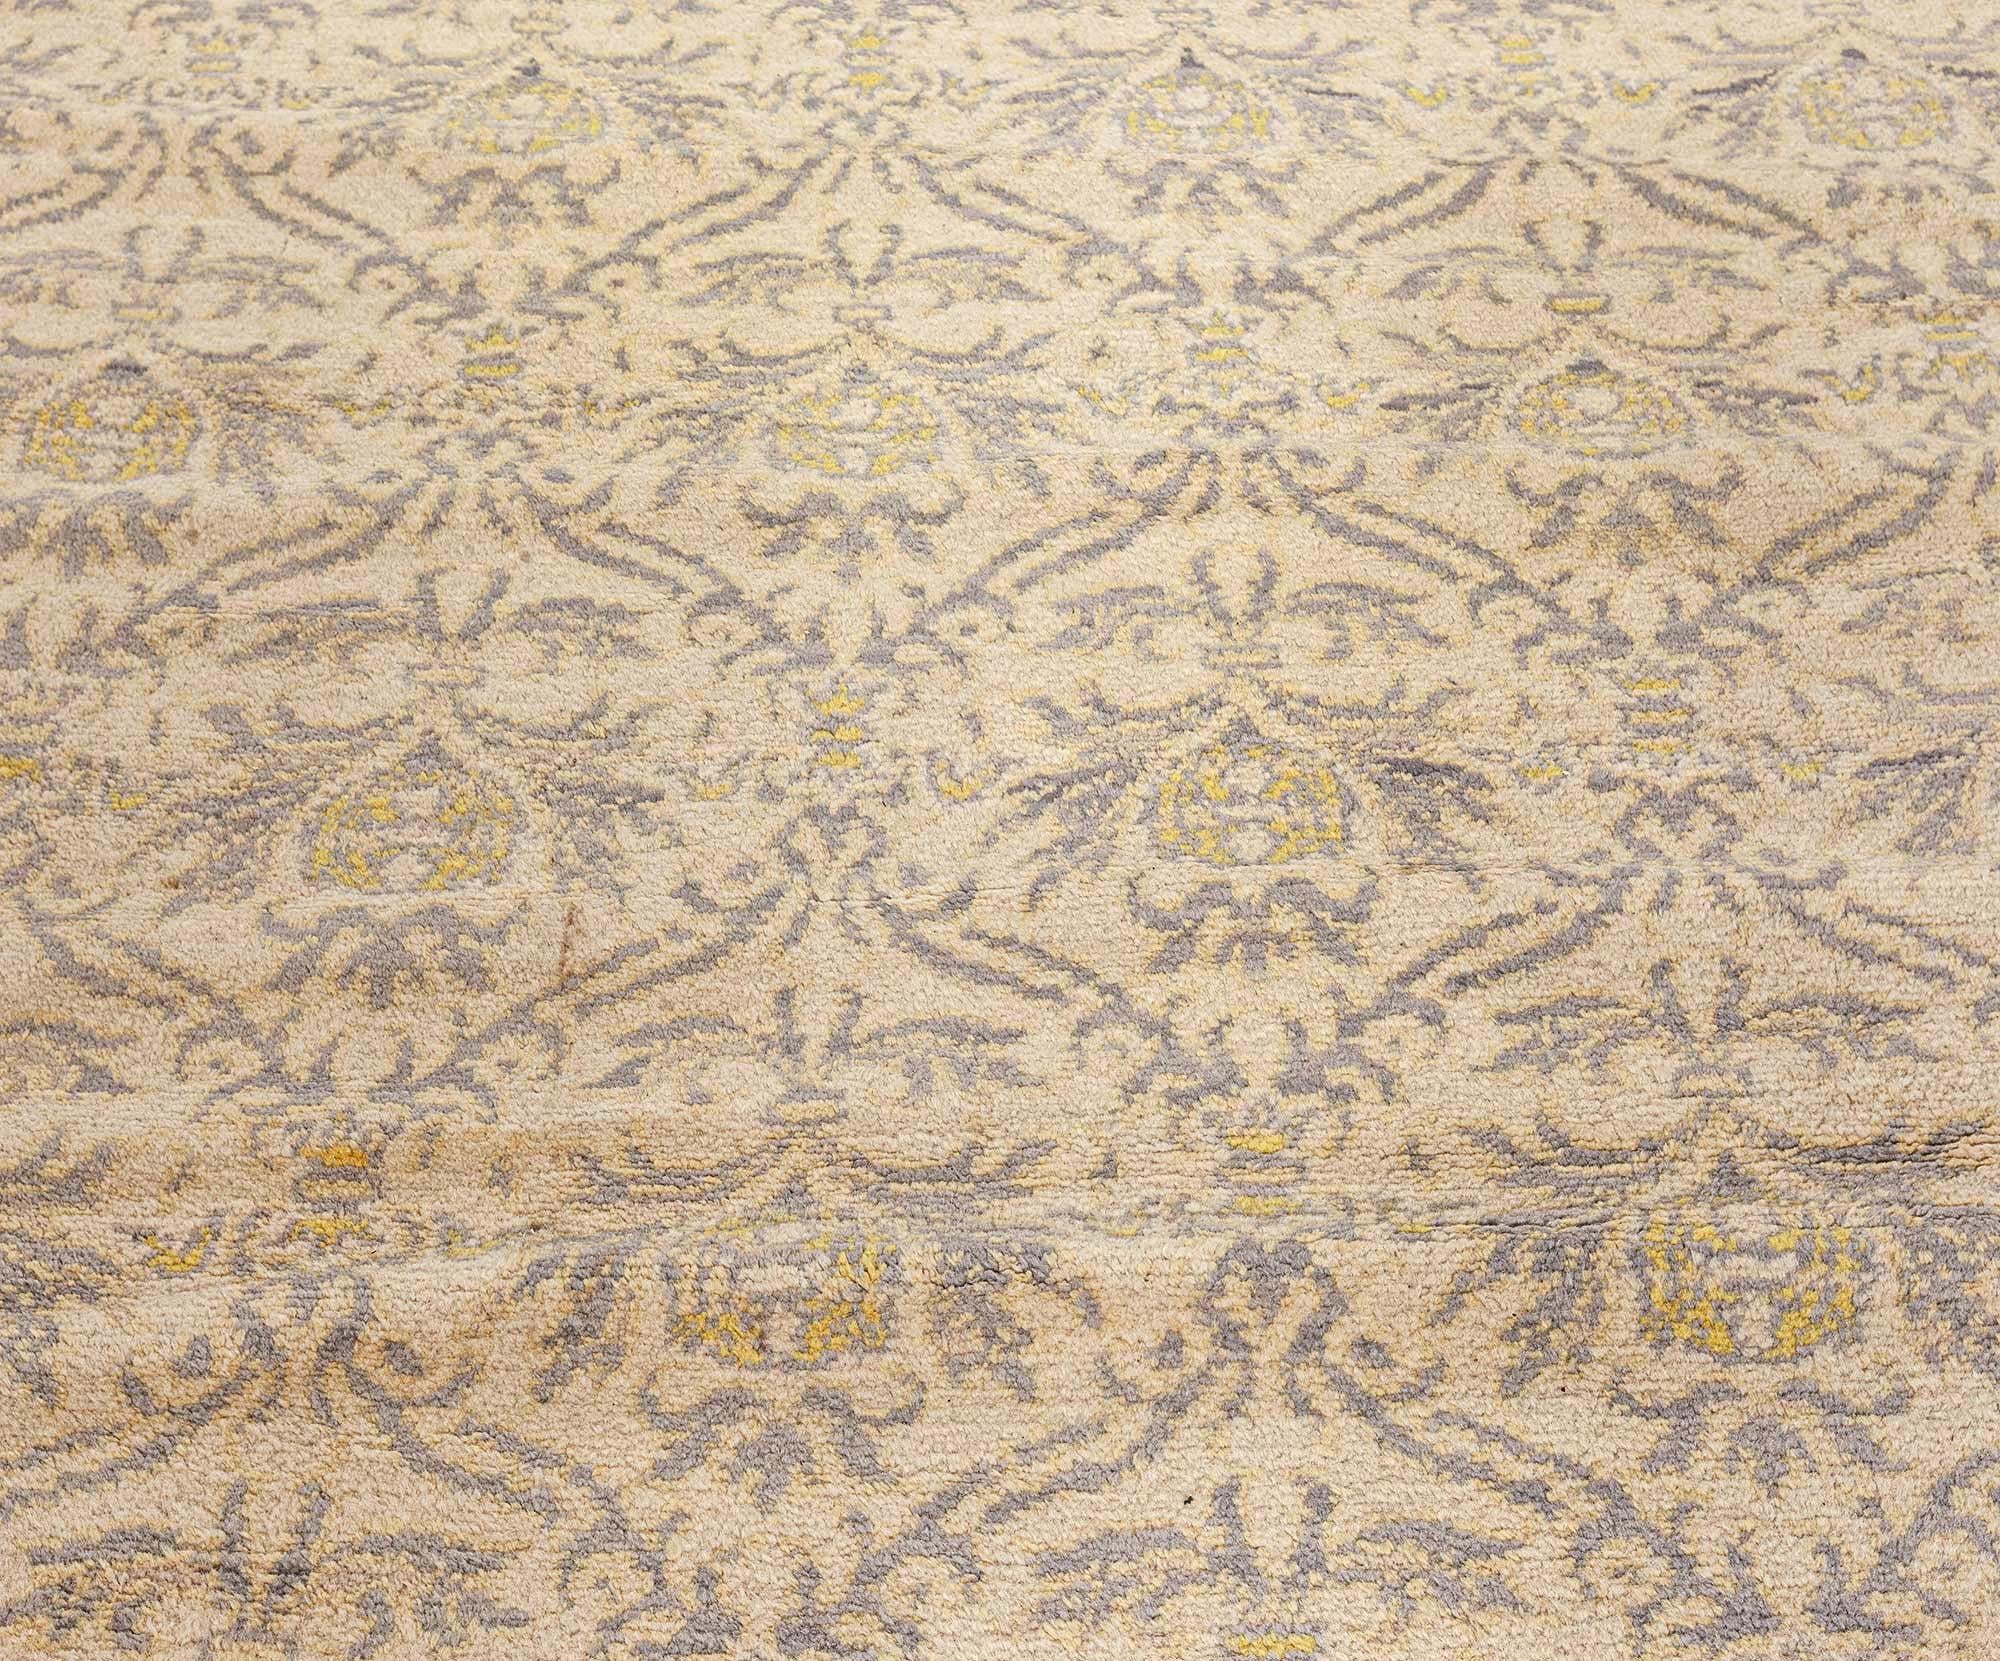 Vintage Spanish Area rug
Size: 15'1